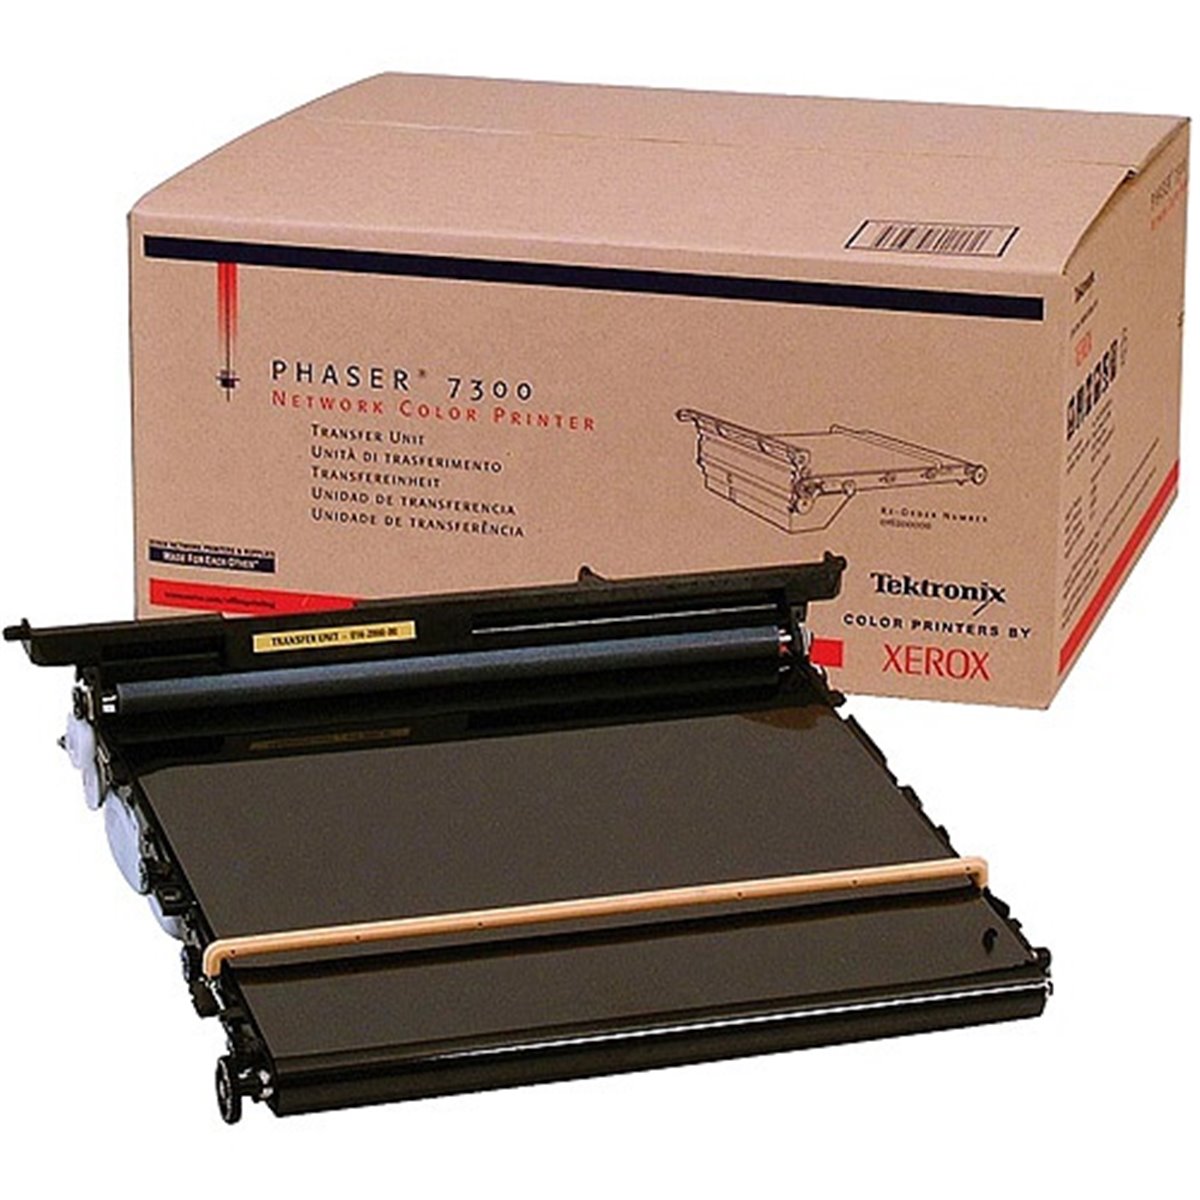 Xerox 016-2000-01 - Phaser 7300 - 470 x 521 x 242 mm - 4.9 kg